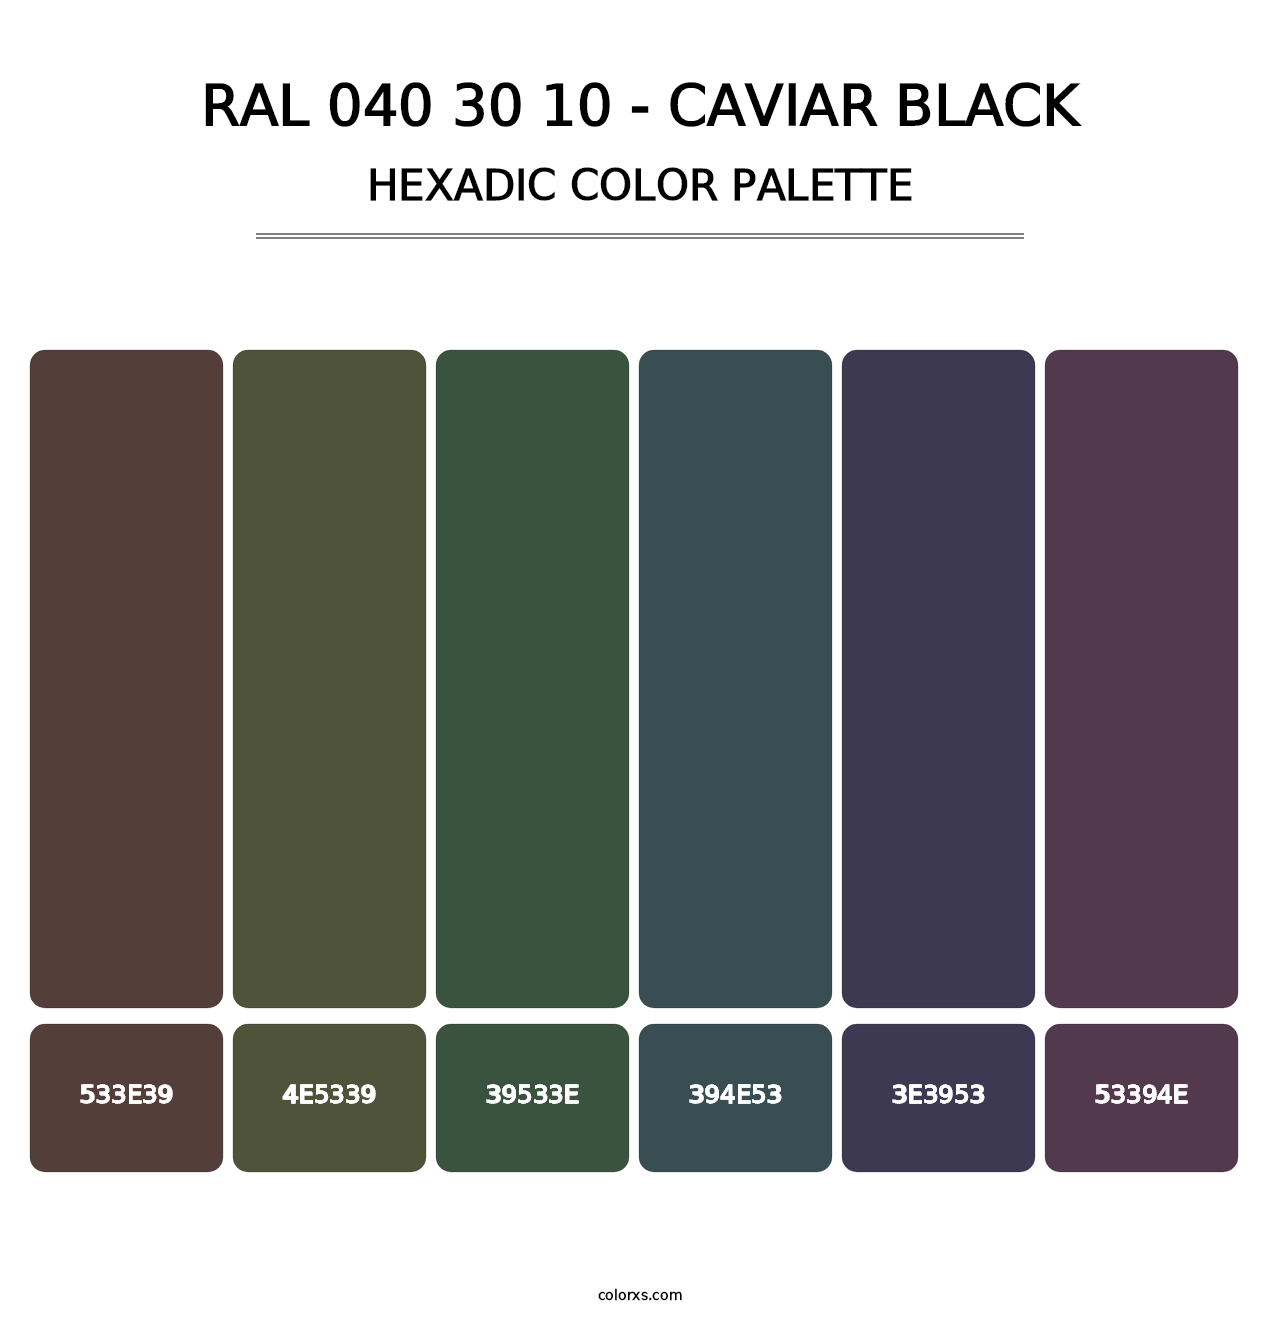 RAL 040 30 10 - Caviar Black - Hexadic Color Palette